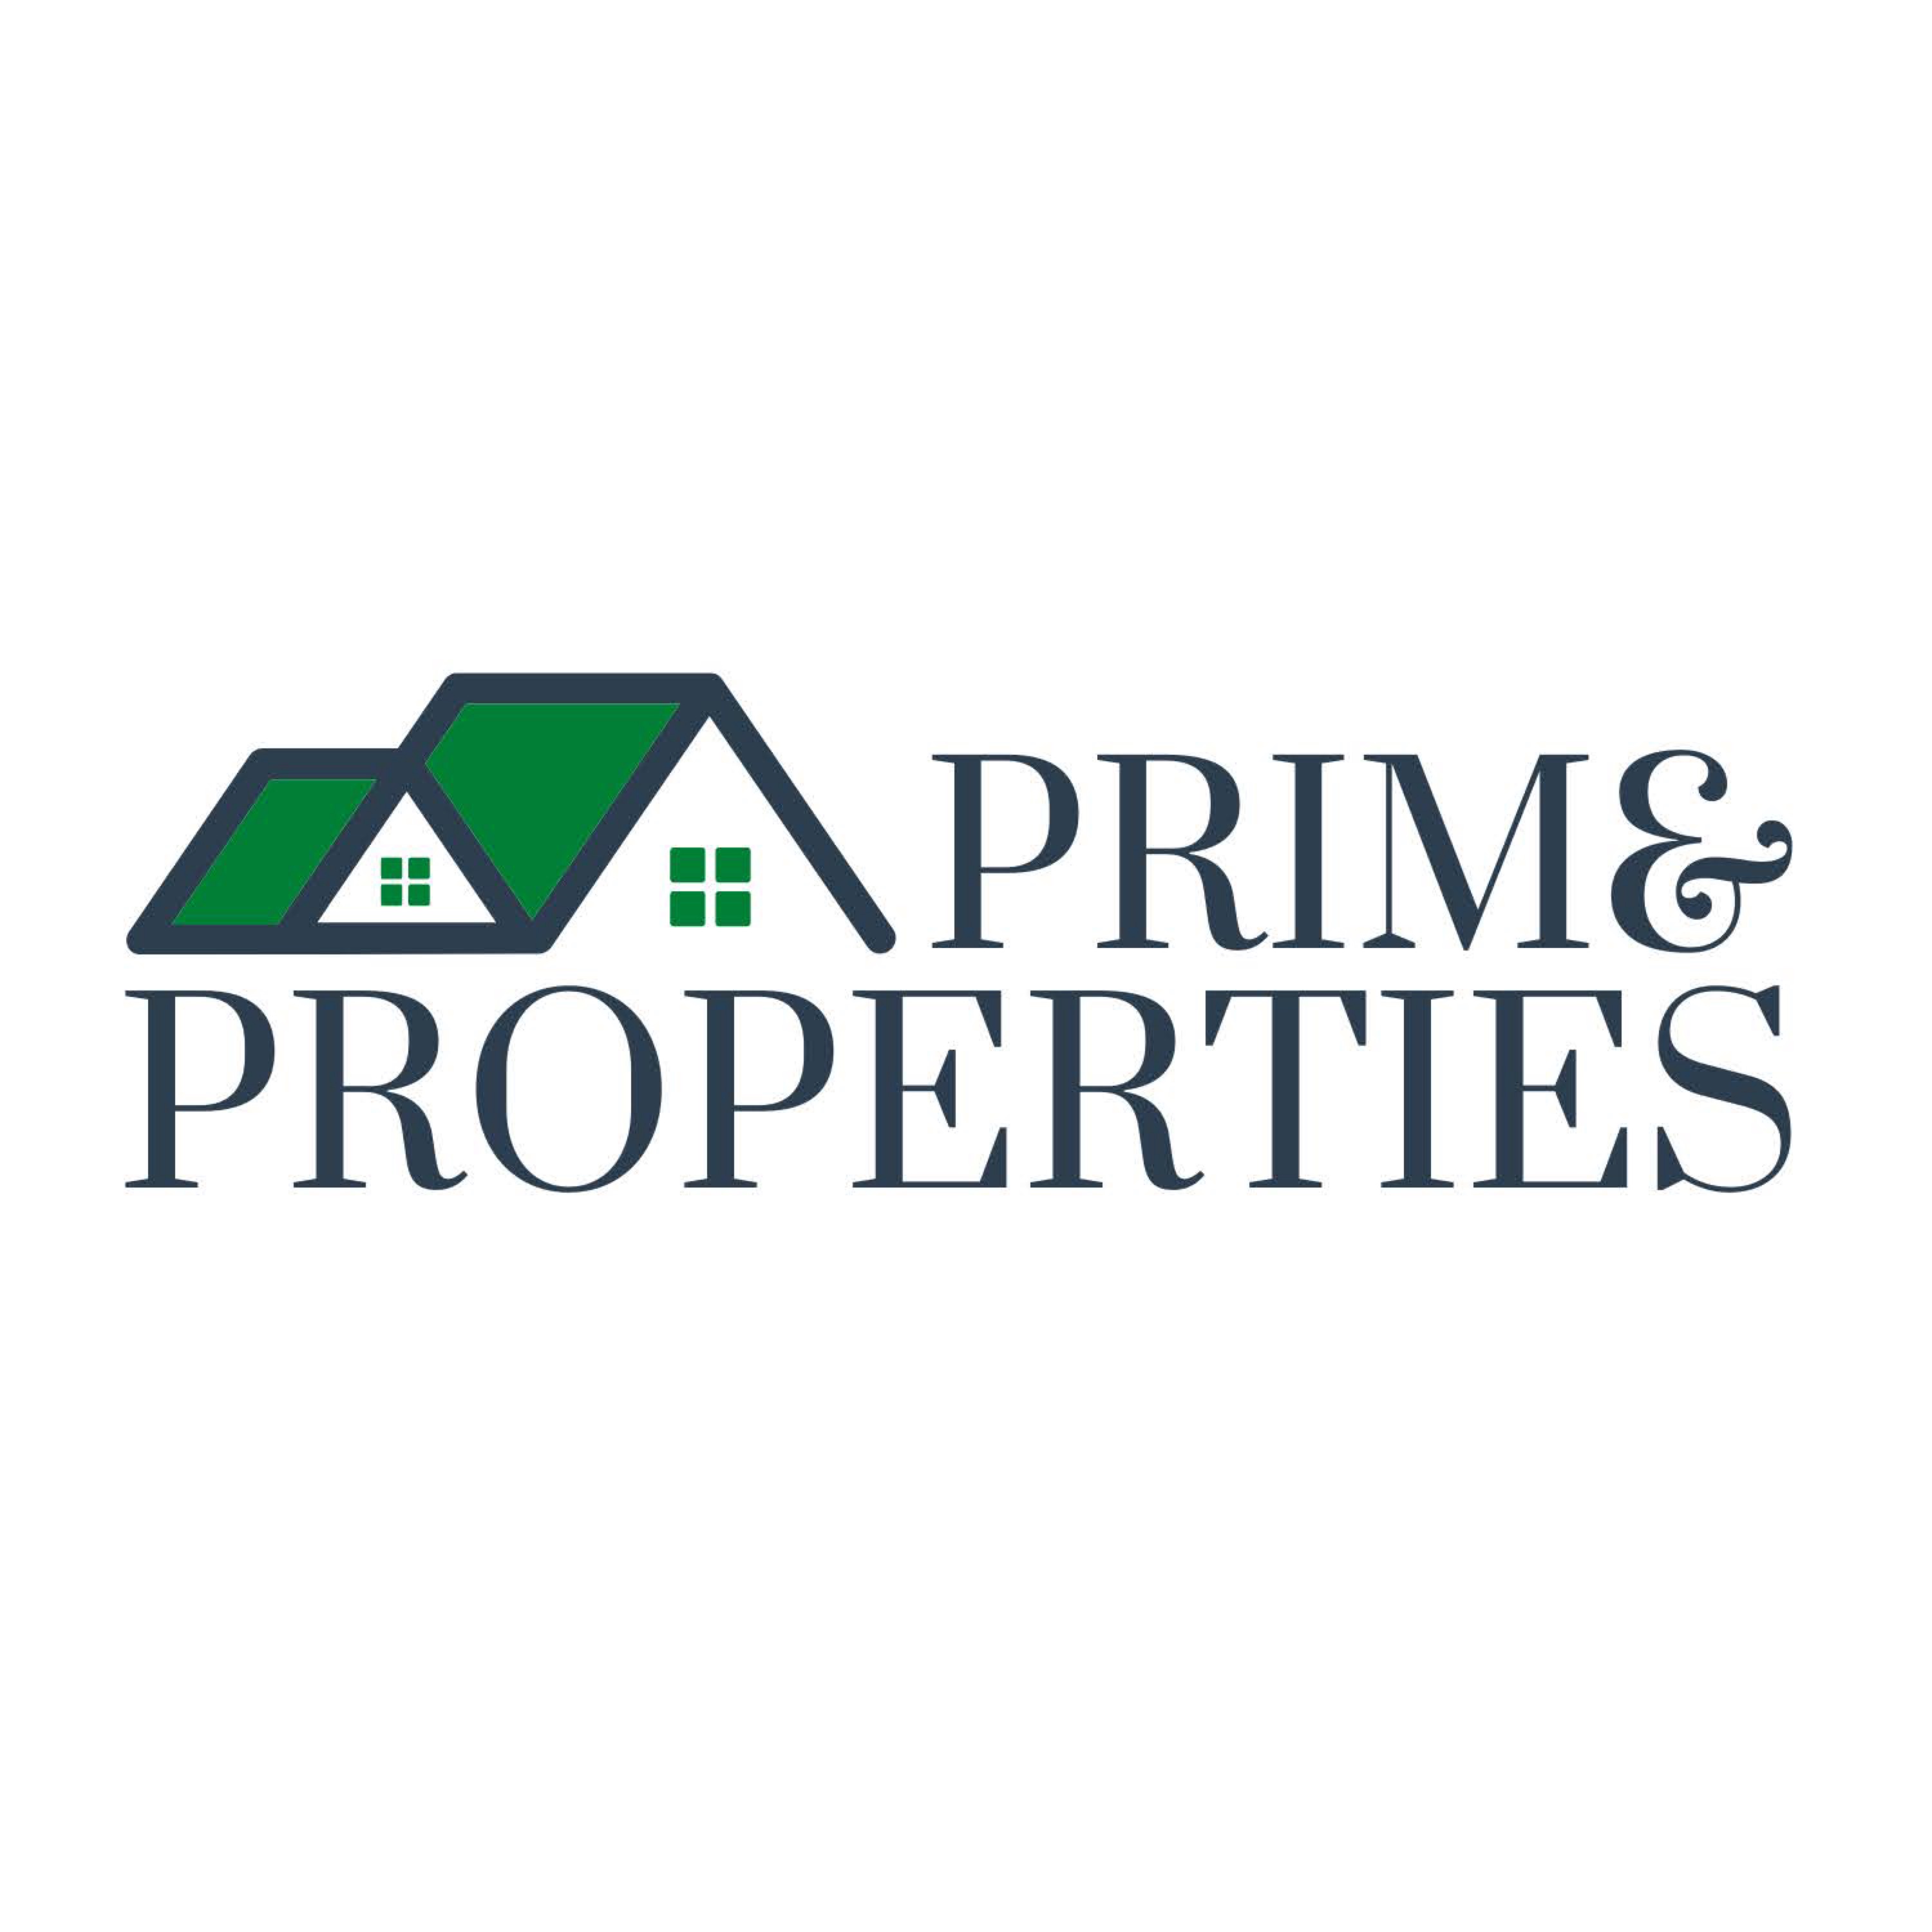 Prim&Properties Logo